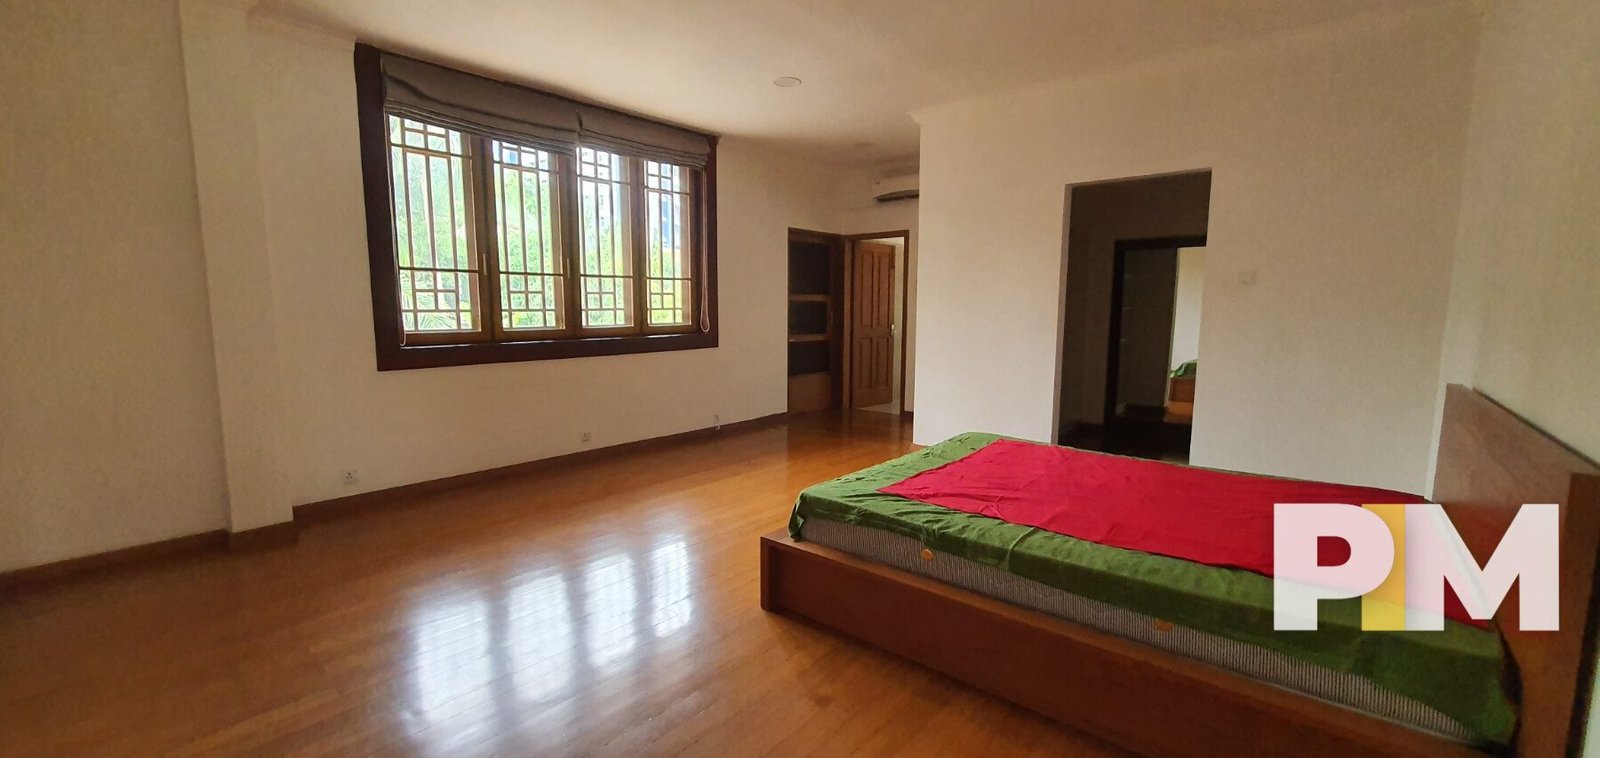 Bedroom with windows - Yangon Real Estate